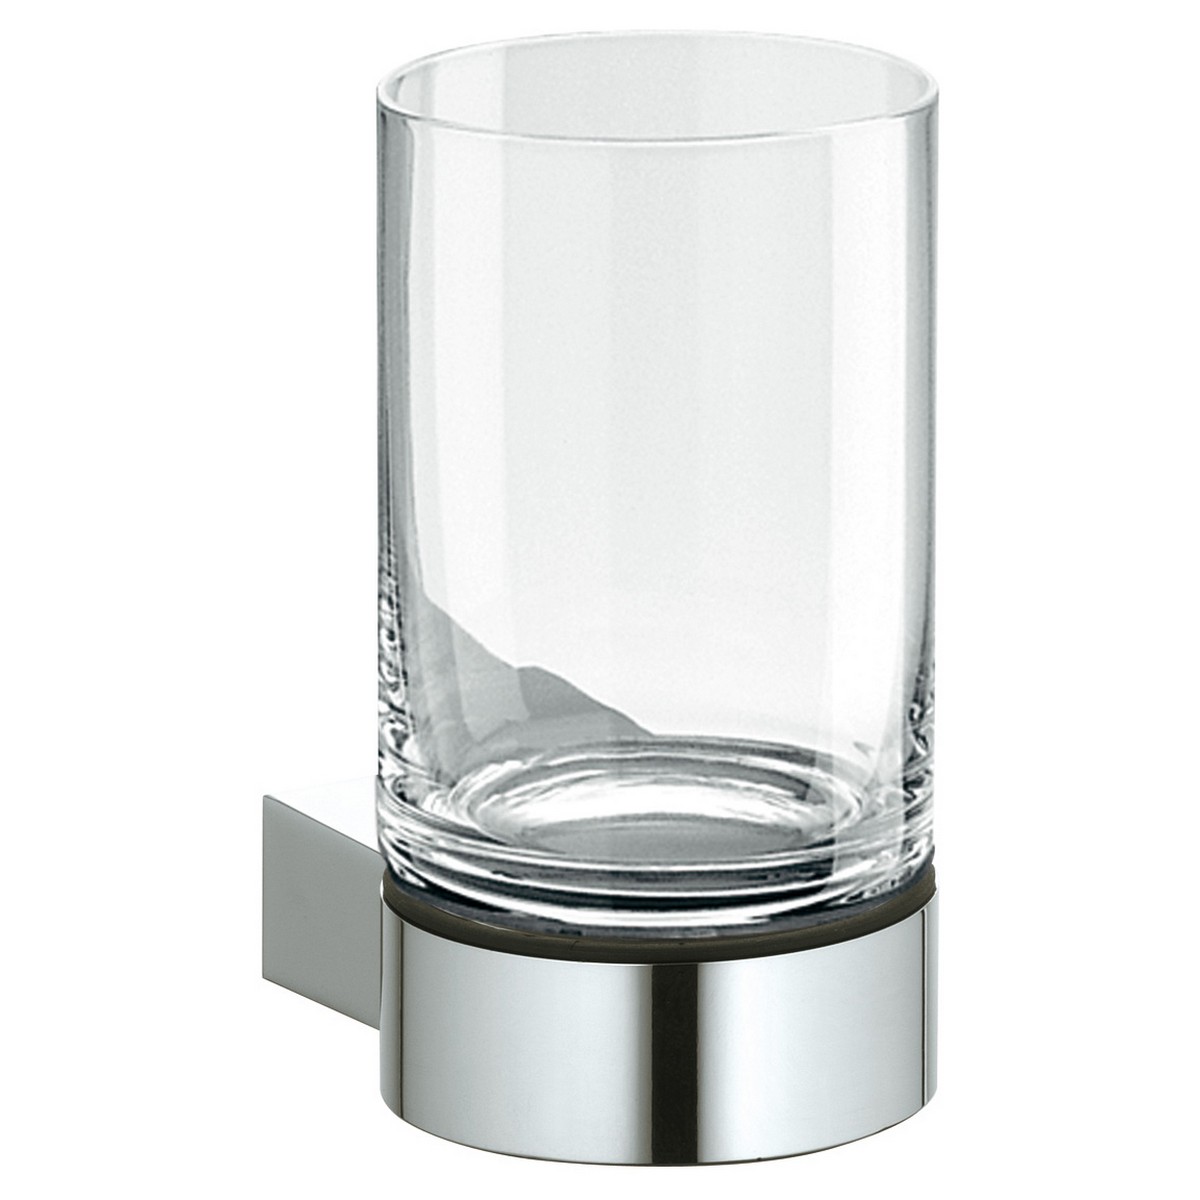 KEUCO 149509000 PLAN 2 5/8 INCH WALL MOUNTED CRYSTAL GLASS TUMBLER HOLDER